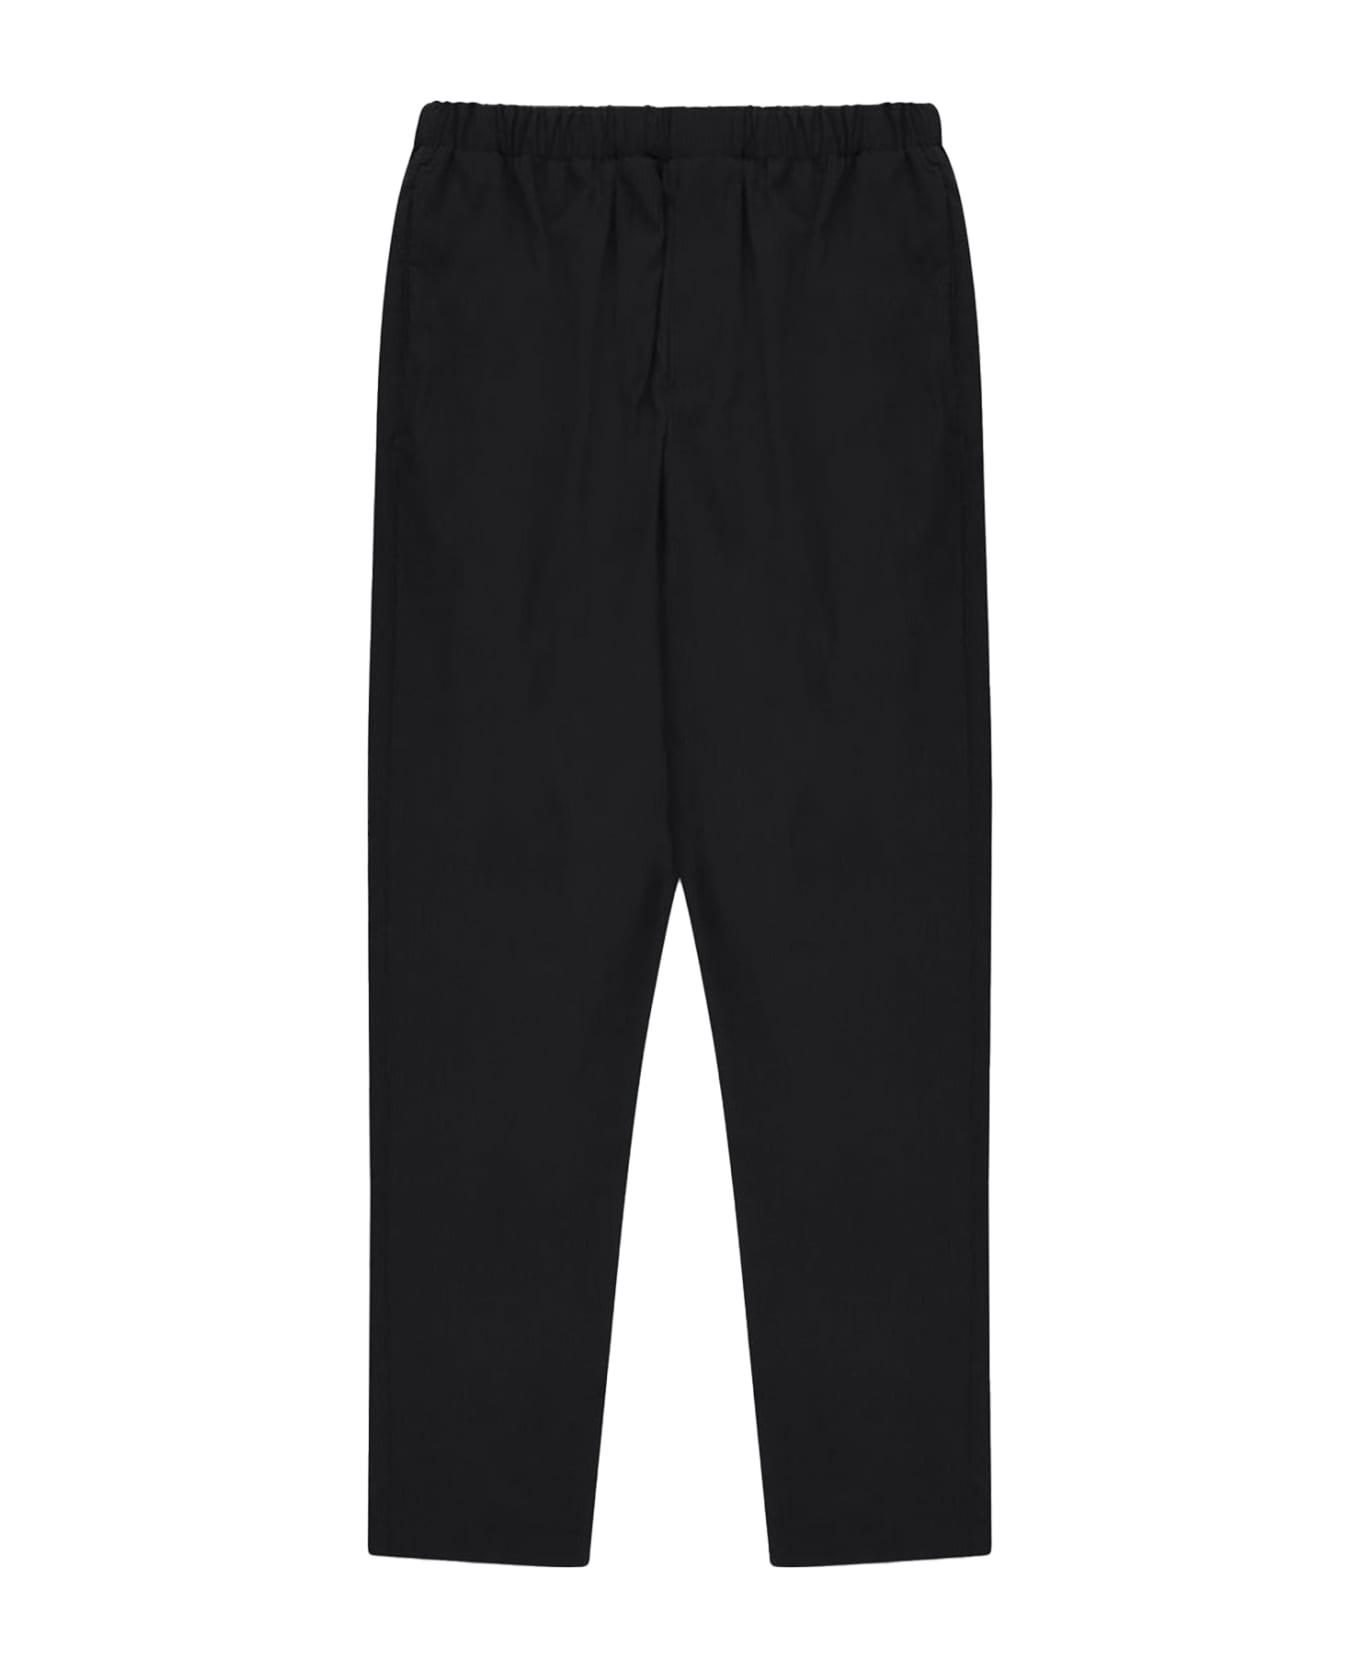 Cruna Black Linen Blend Trousers - NERO ボトムス